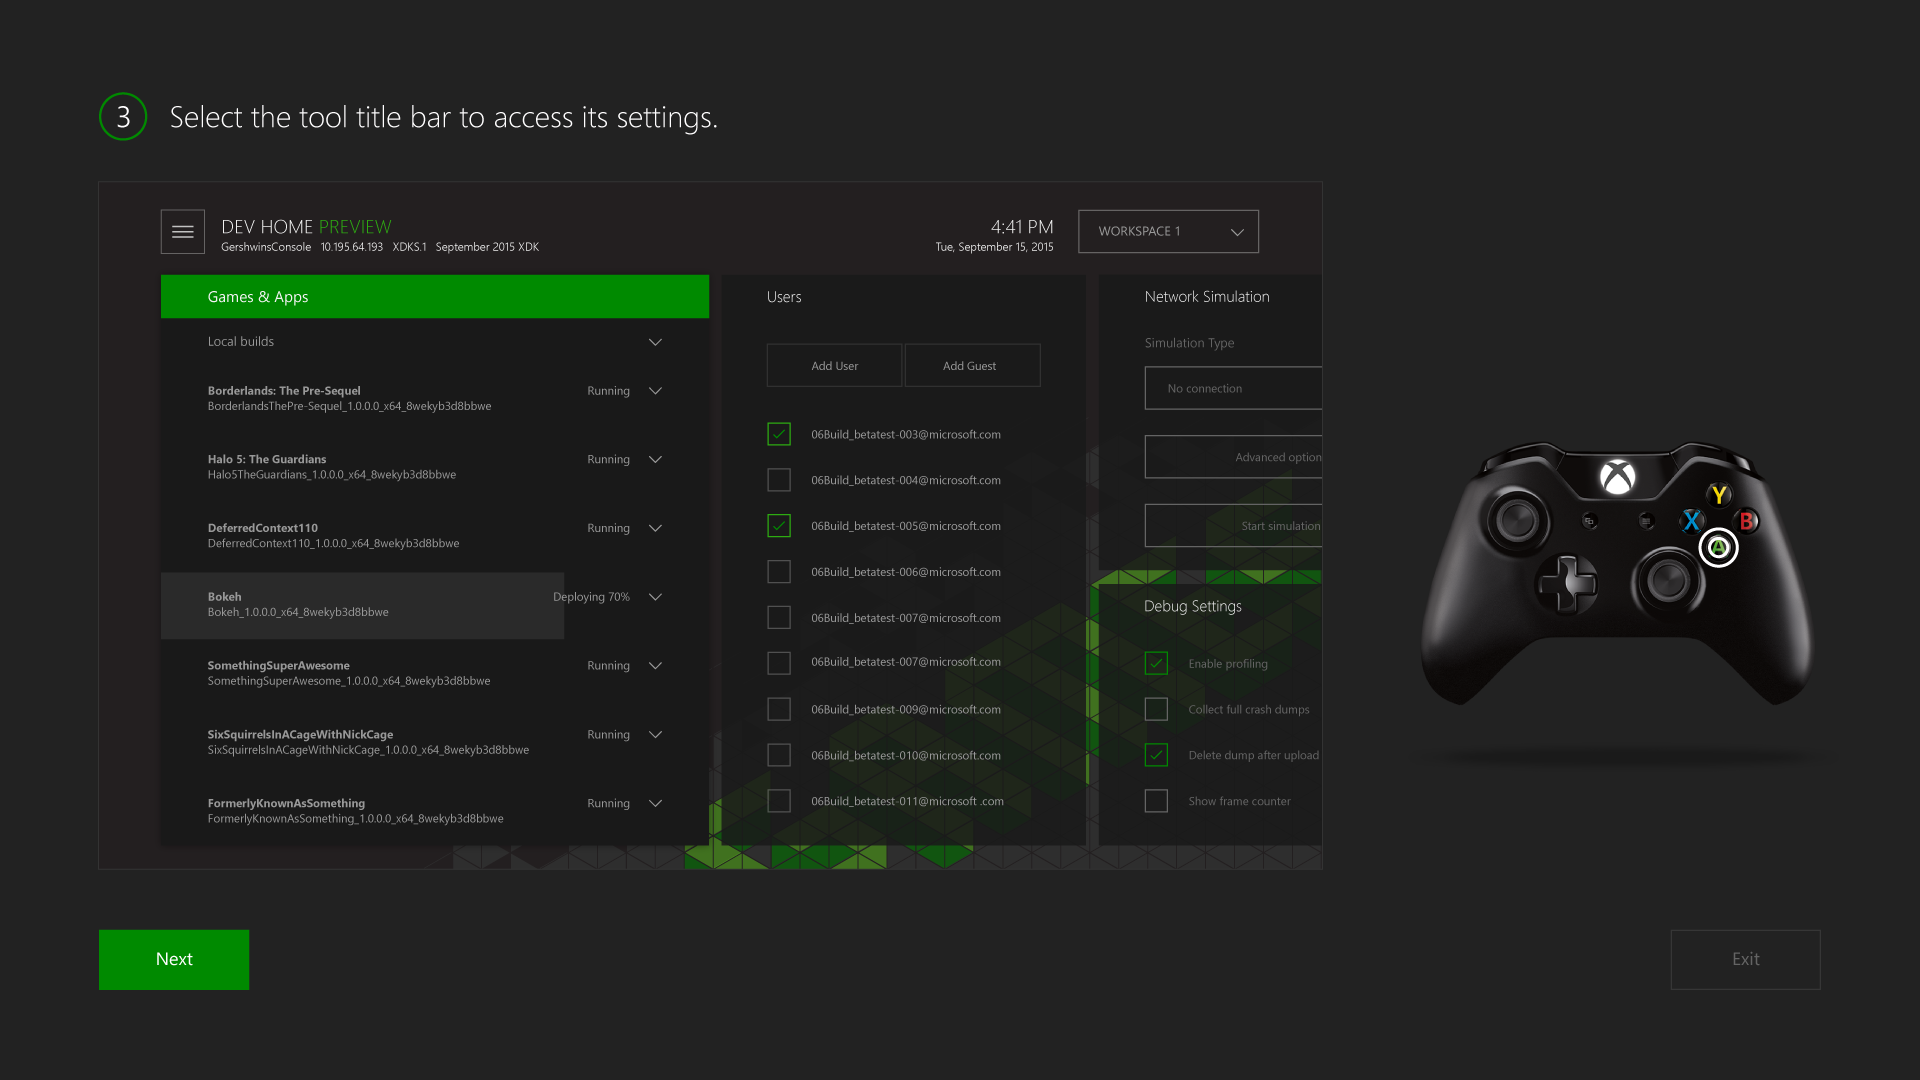 Xbox One Dev Home